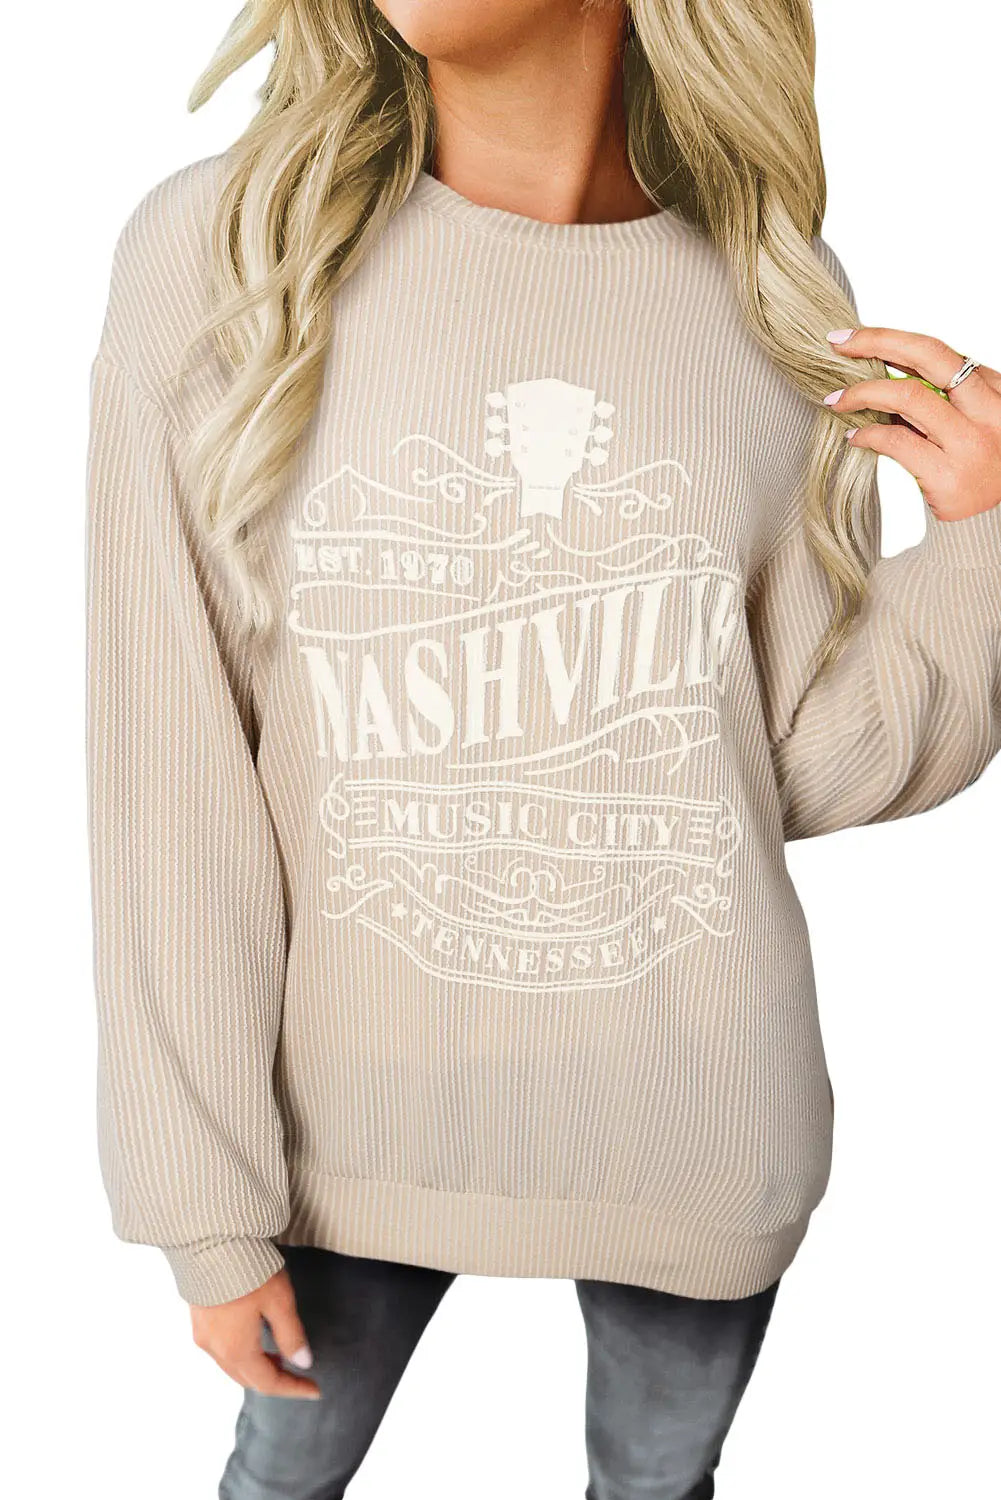 Black nashville music city corded graphic sweatshirt - tops